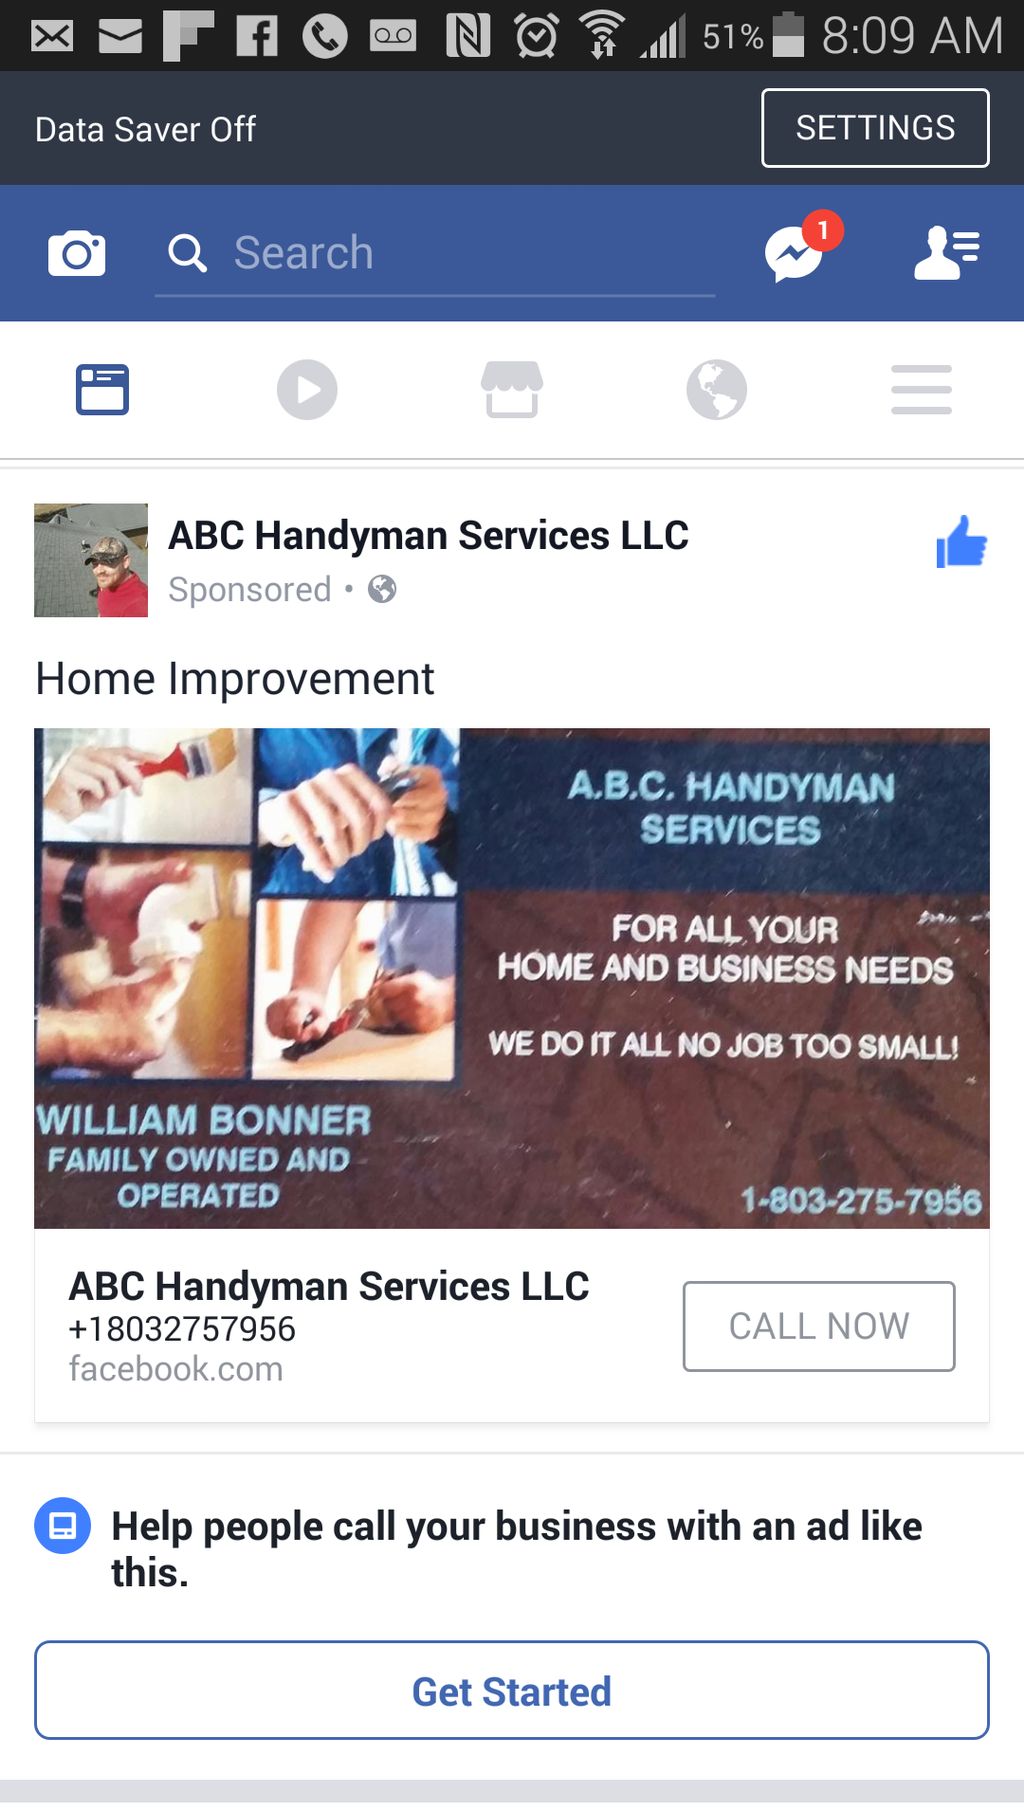 ABC HANDYMAN SERVICES